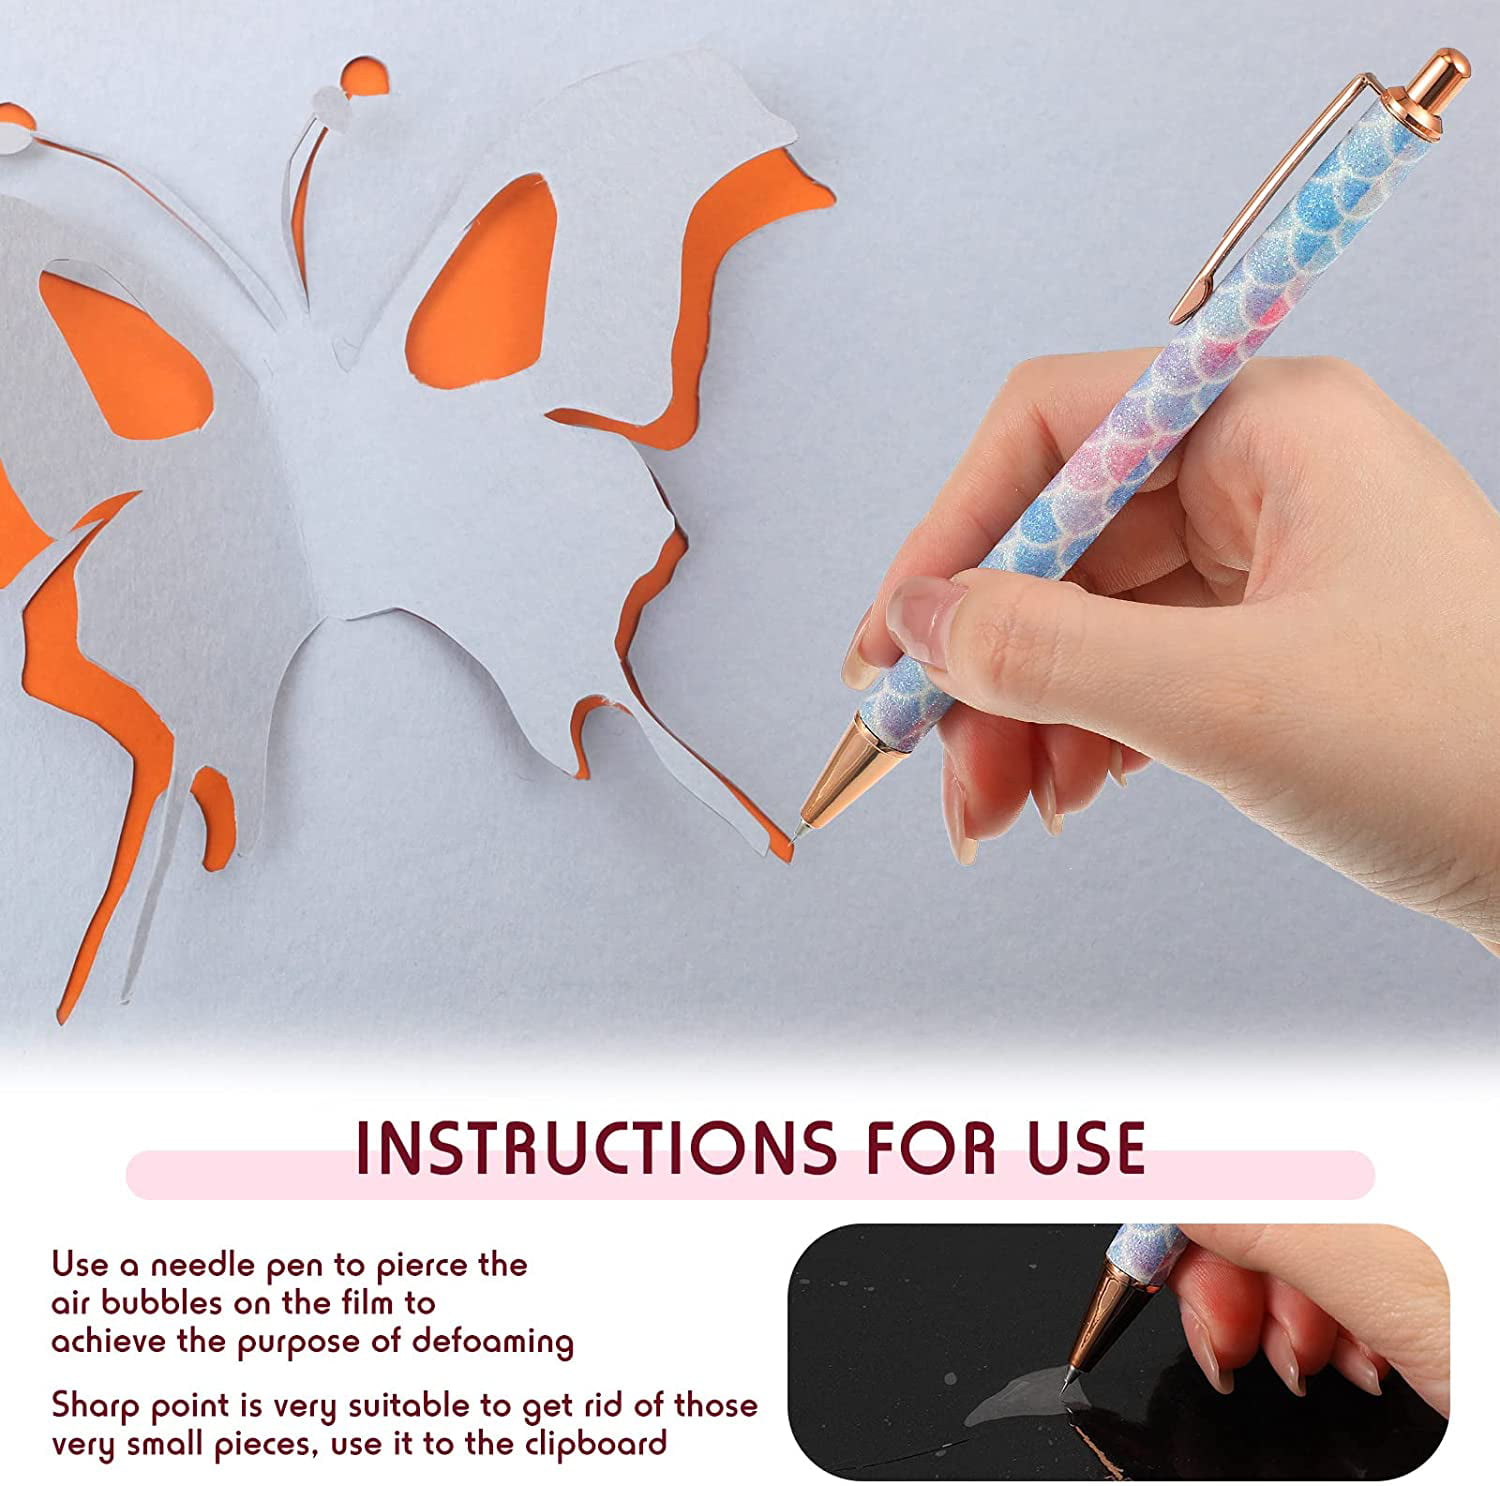 Pin Pen Weeding Tool Air Release Pen Cricut Silhouette Weeding